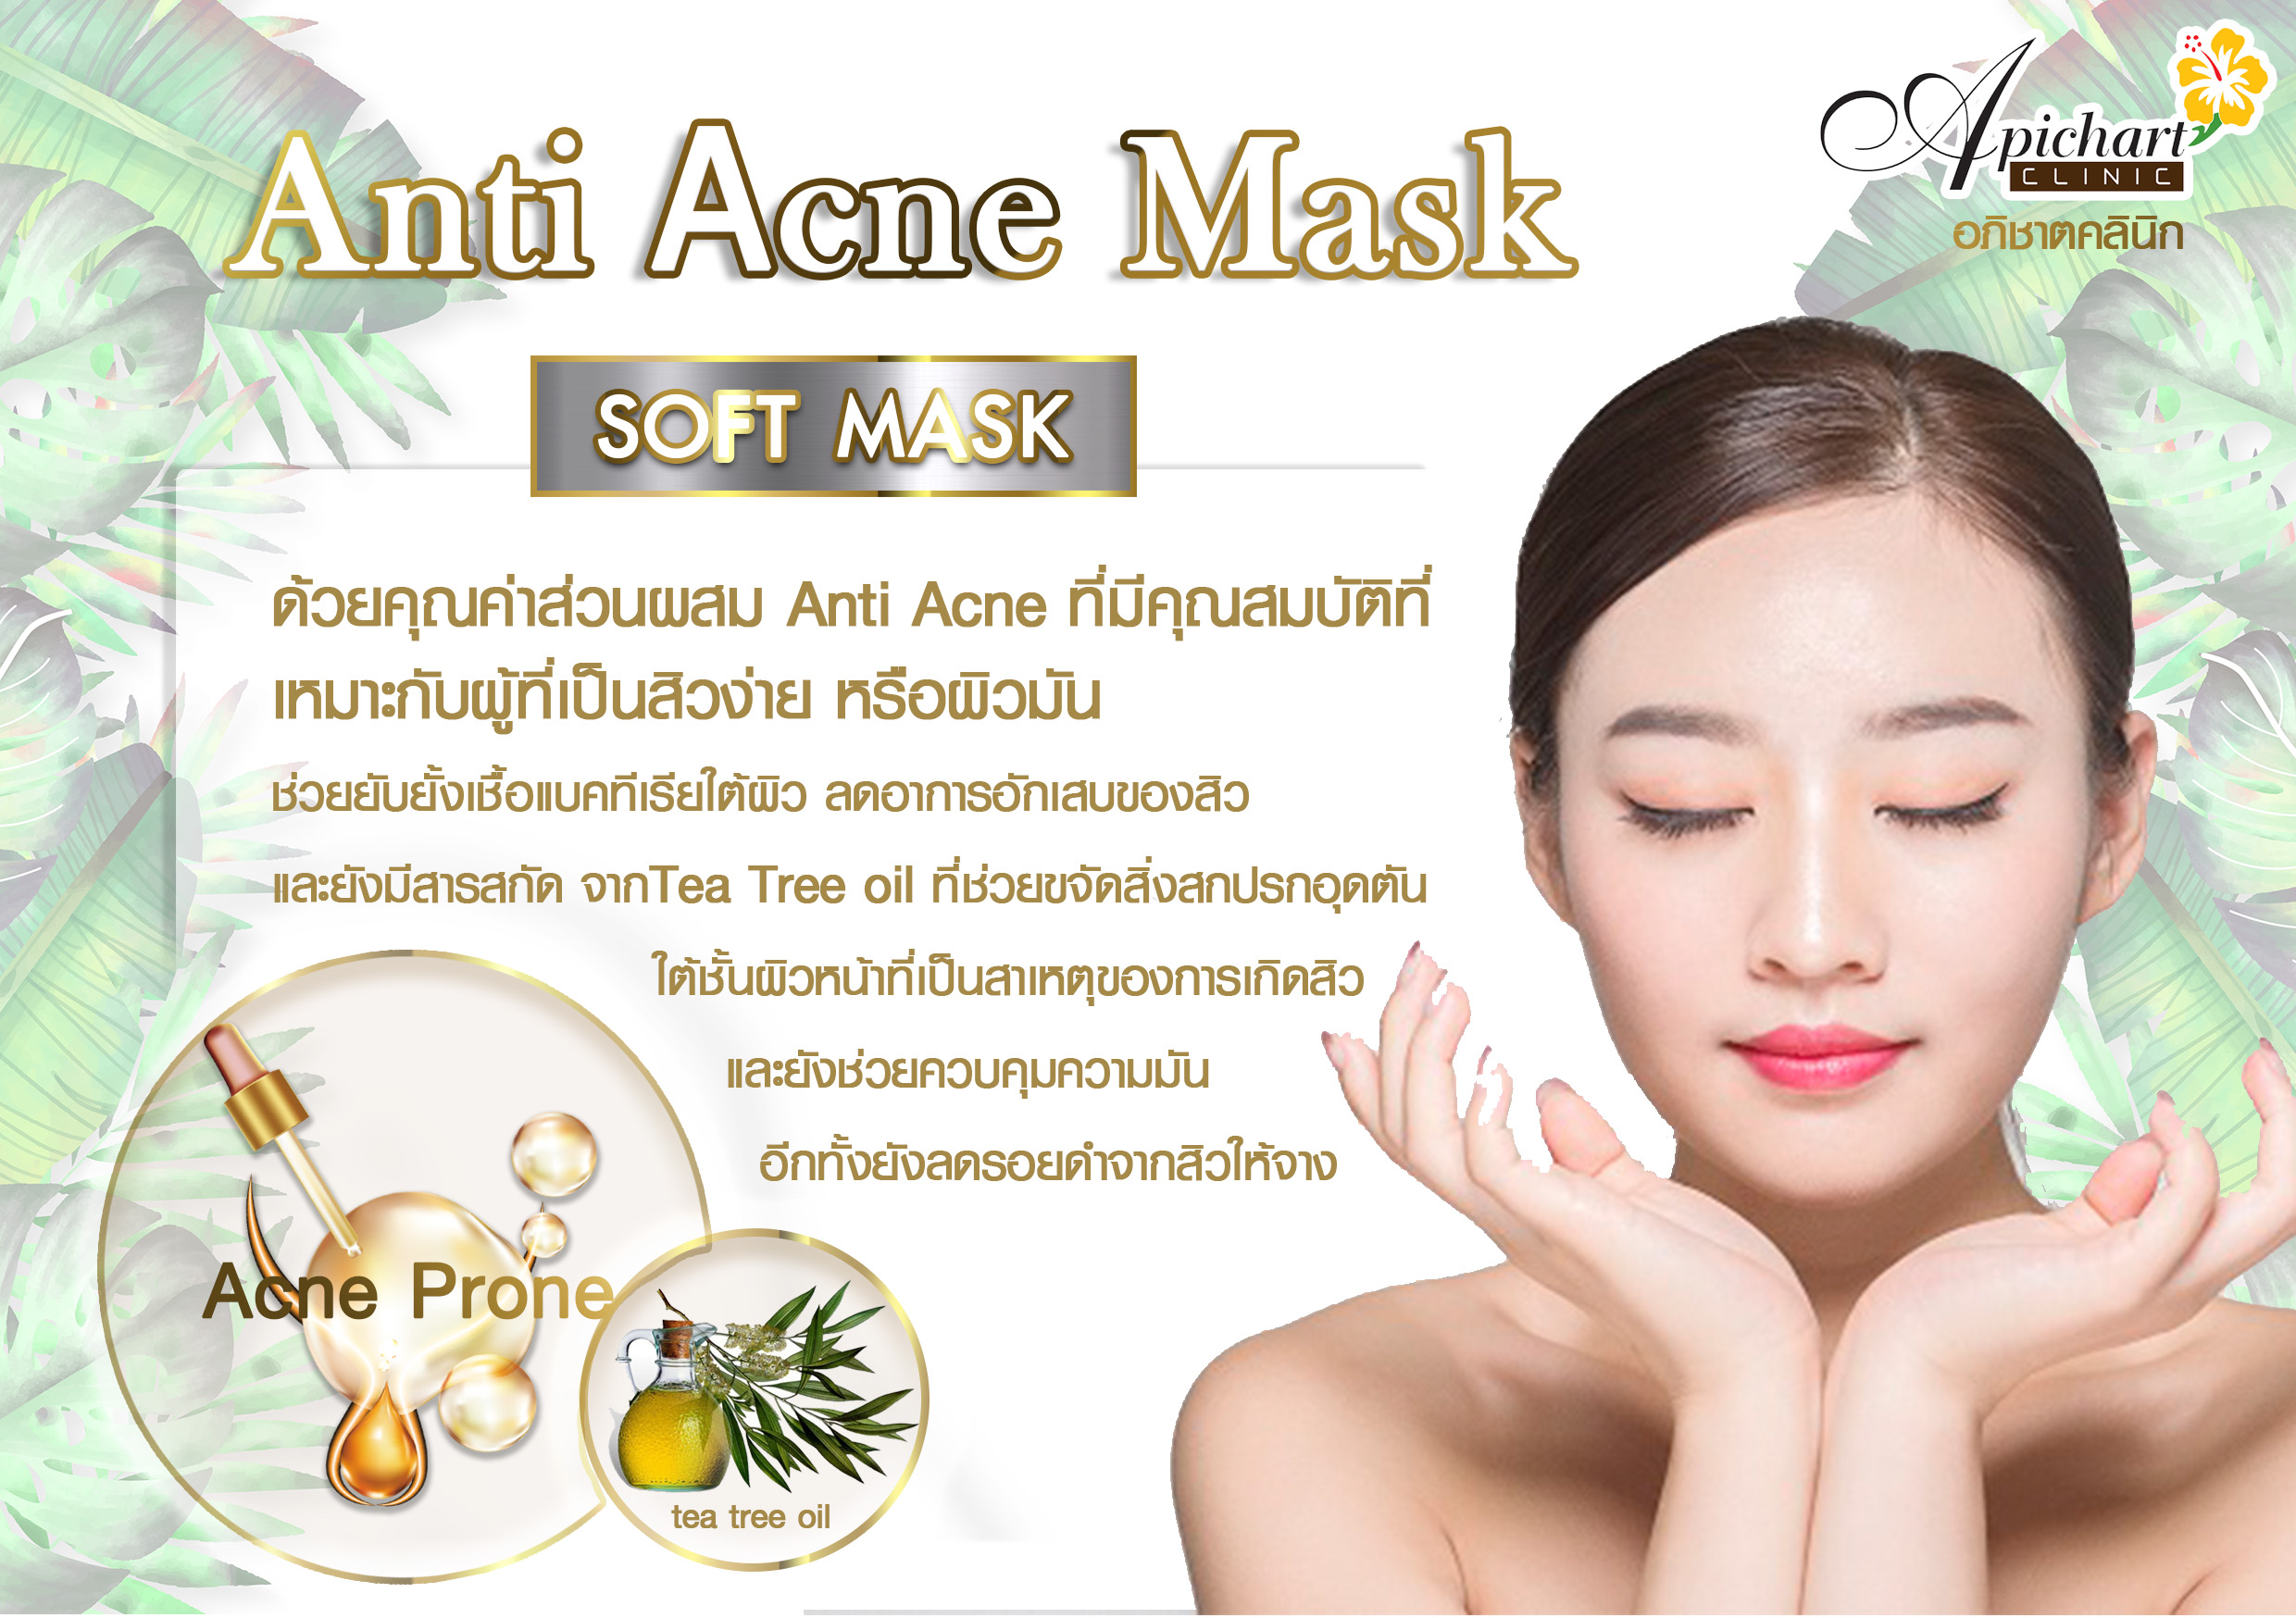 Anti Acne Mask